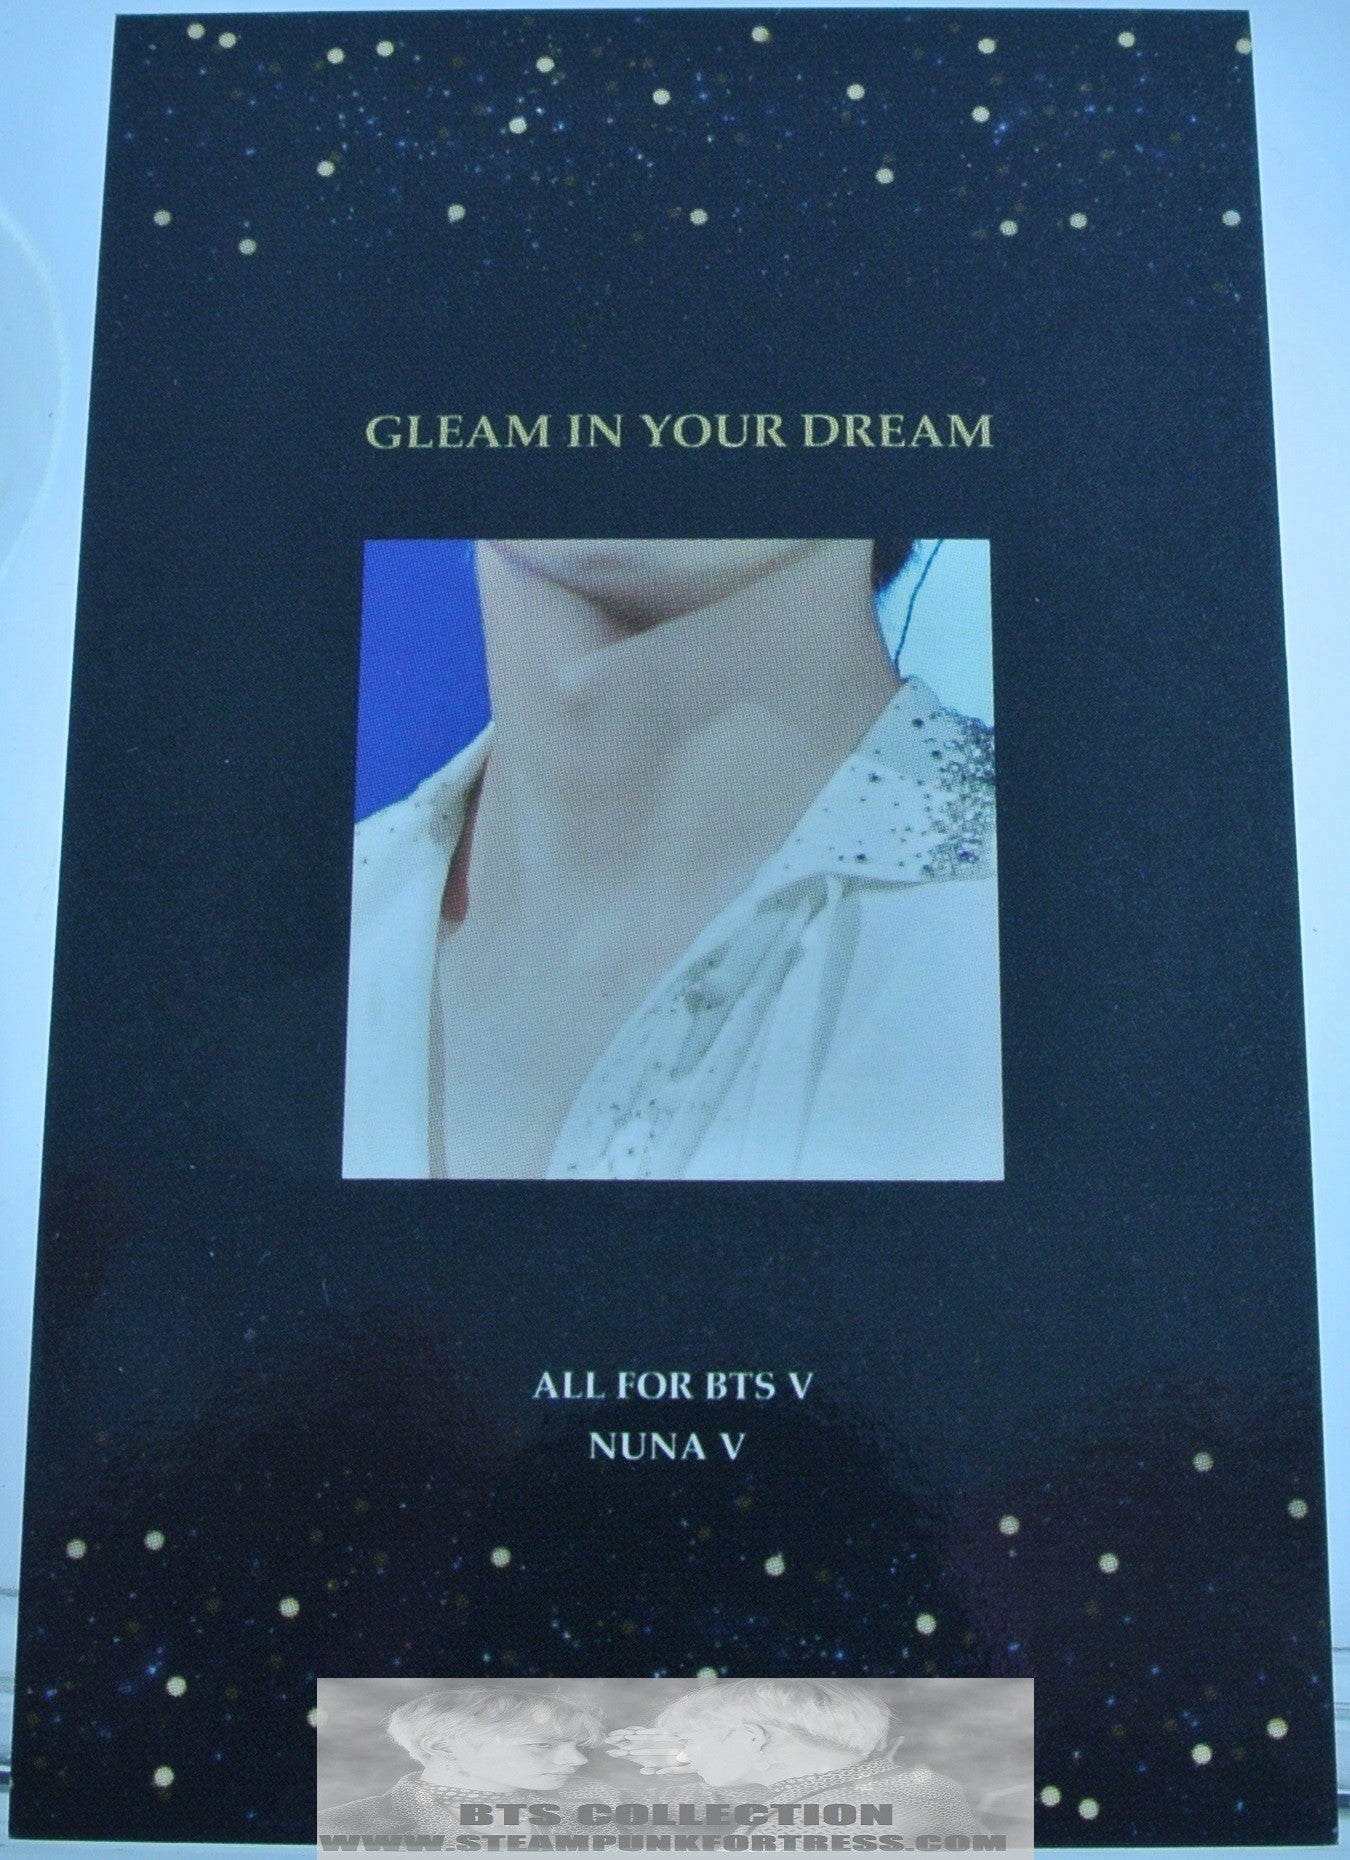 BTS V KIM TAEHYUNG FANSITE PHOTOCARD WHITE SILVER SHIRT GLEAM IN YOUR DREAM NUNA V PHOTO CARD